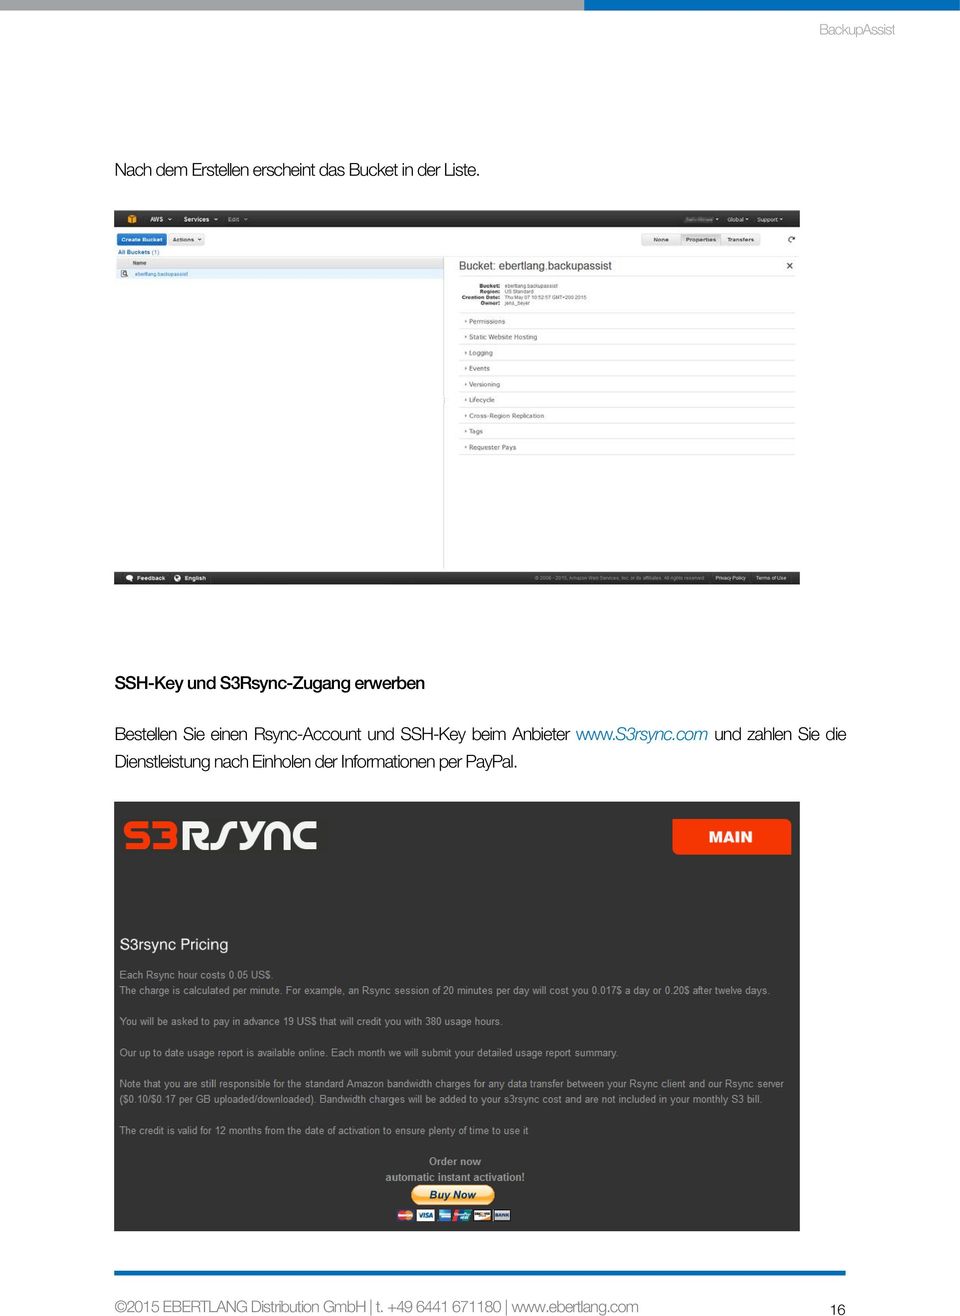 Rsync-Account und SSH-Key beim Anbieter www.s3rsync.